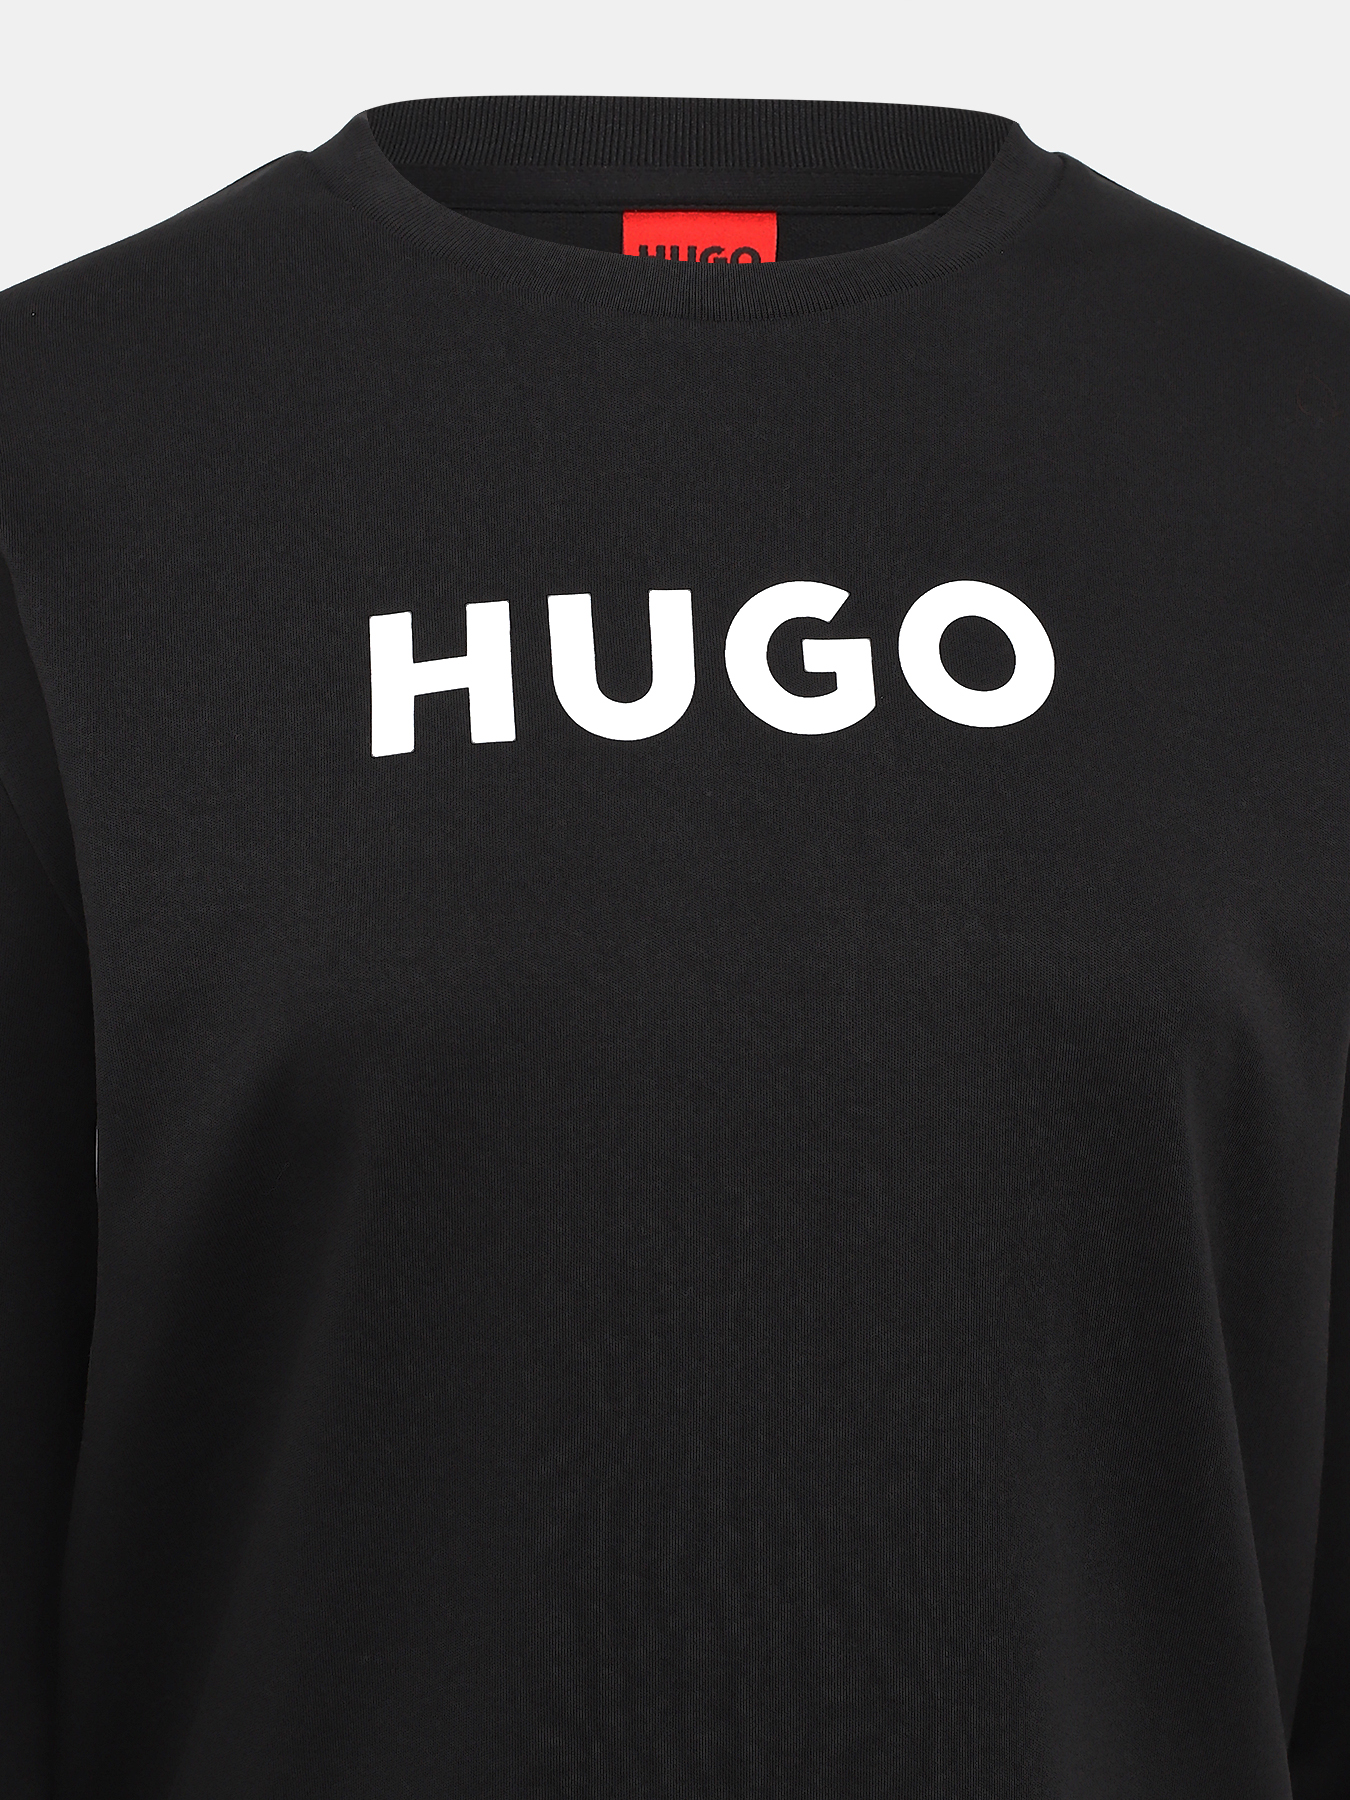 Свитшот The Hugo HUGO 429386-042 Фото 2